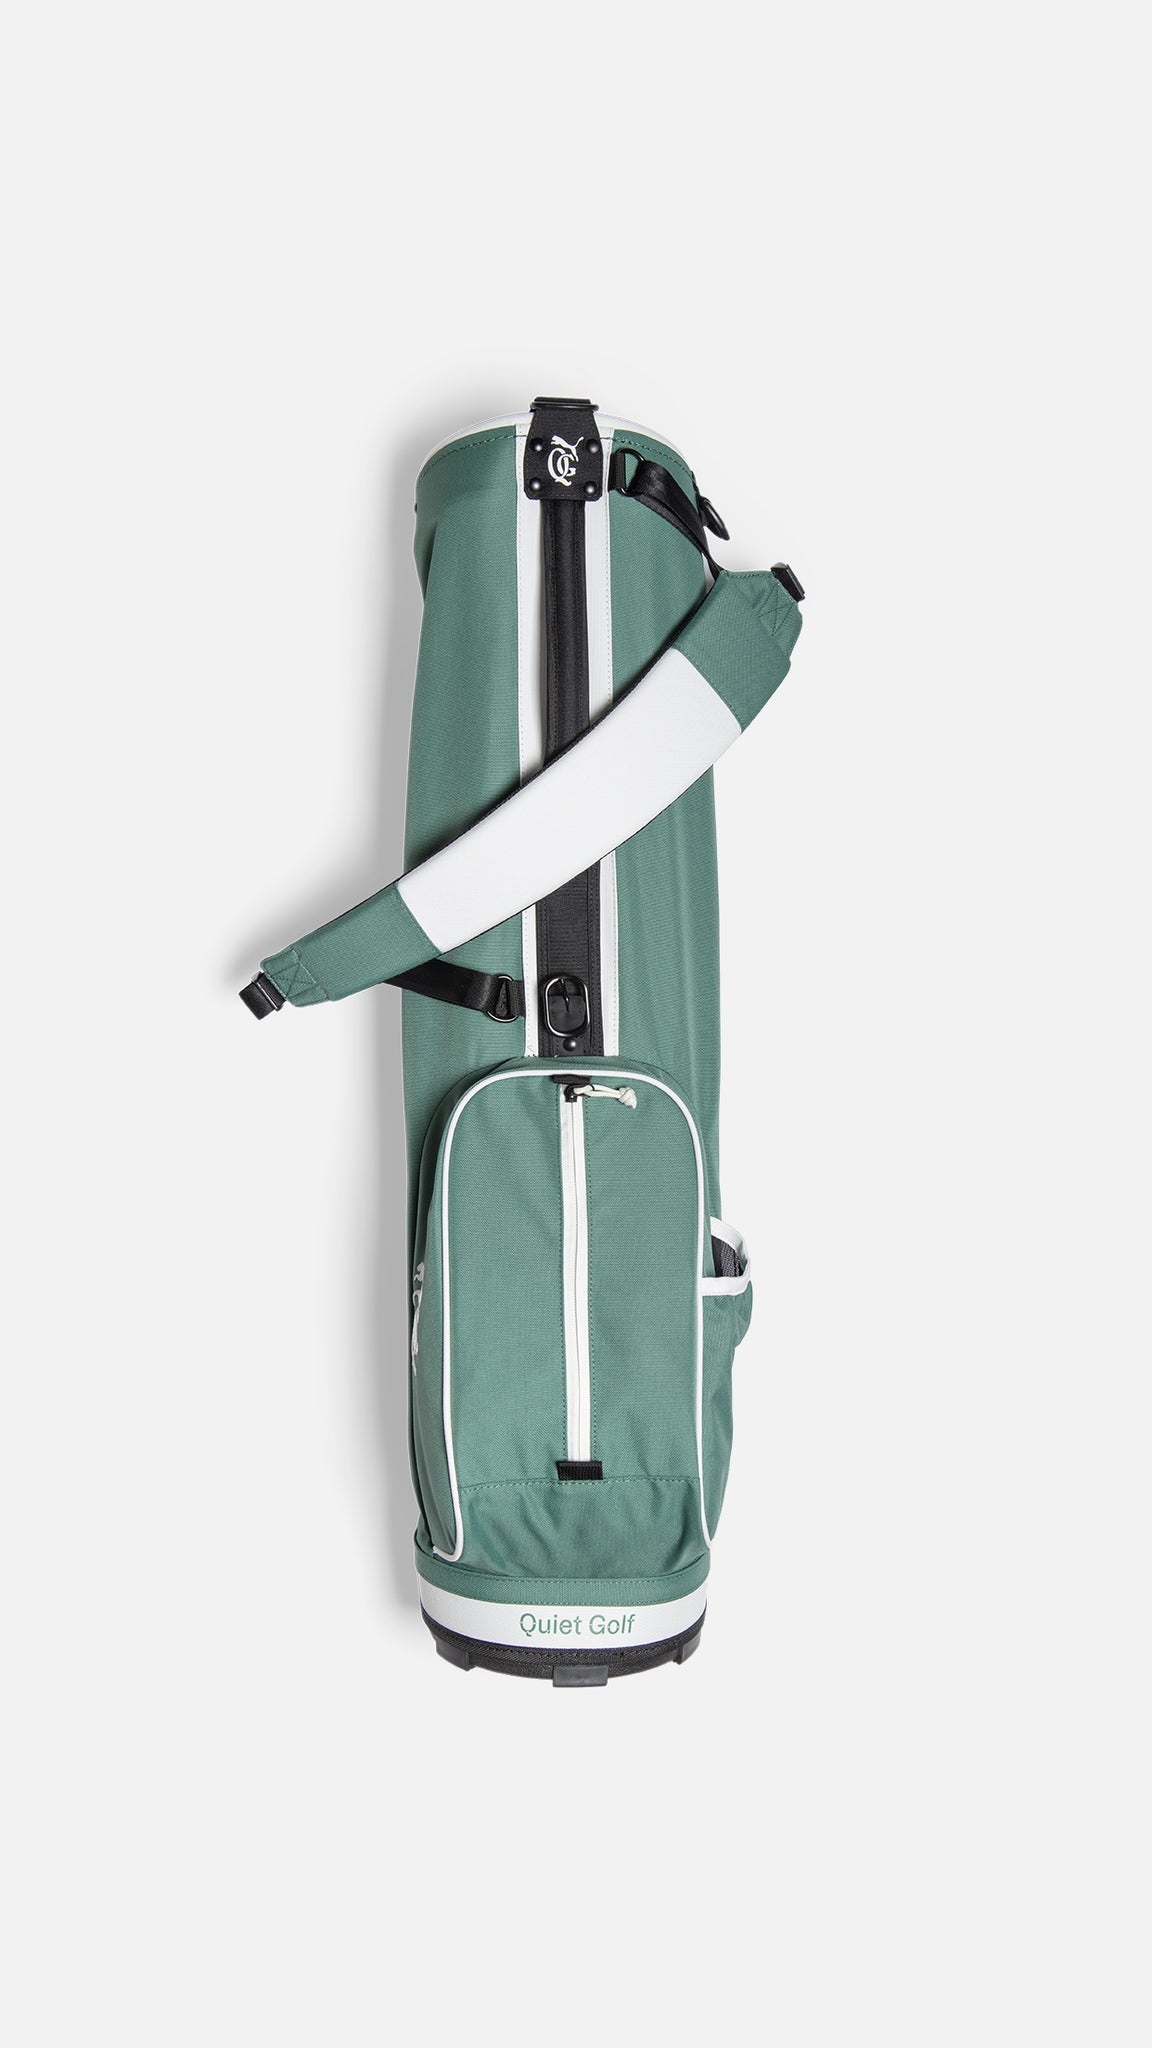 Quiet Golf x Puma Pencil Bag Deep Forest-Warm White